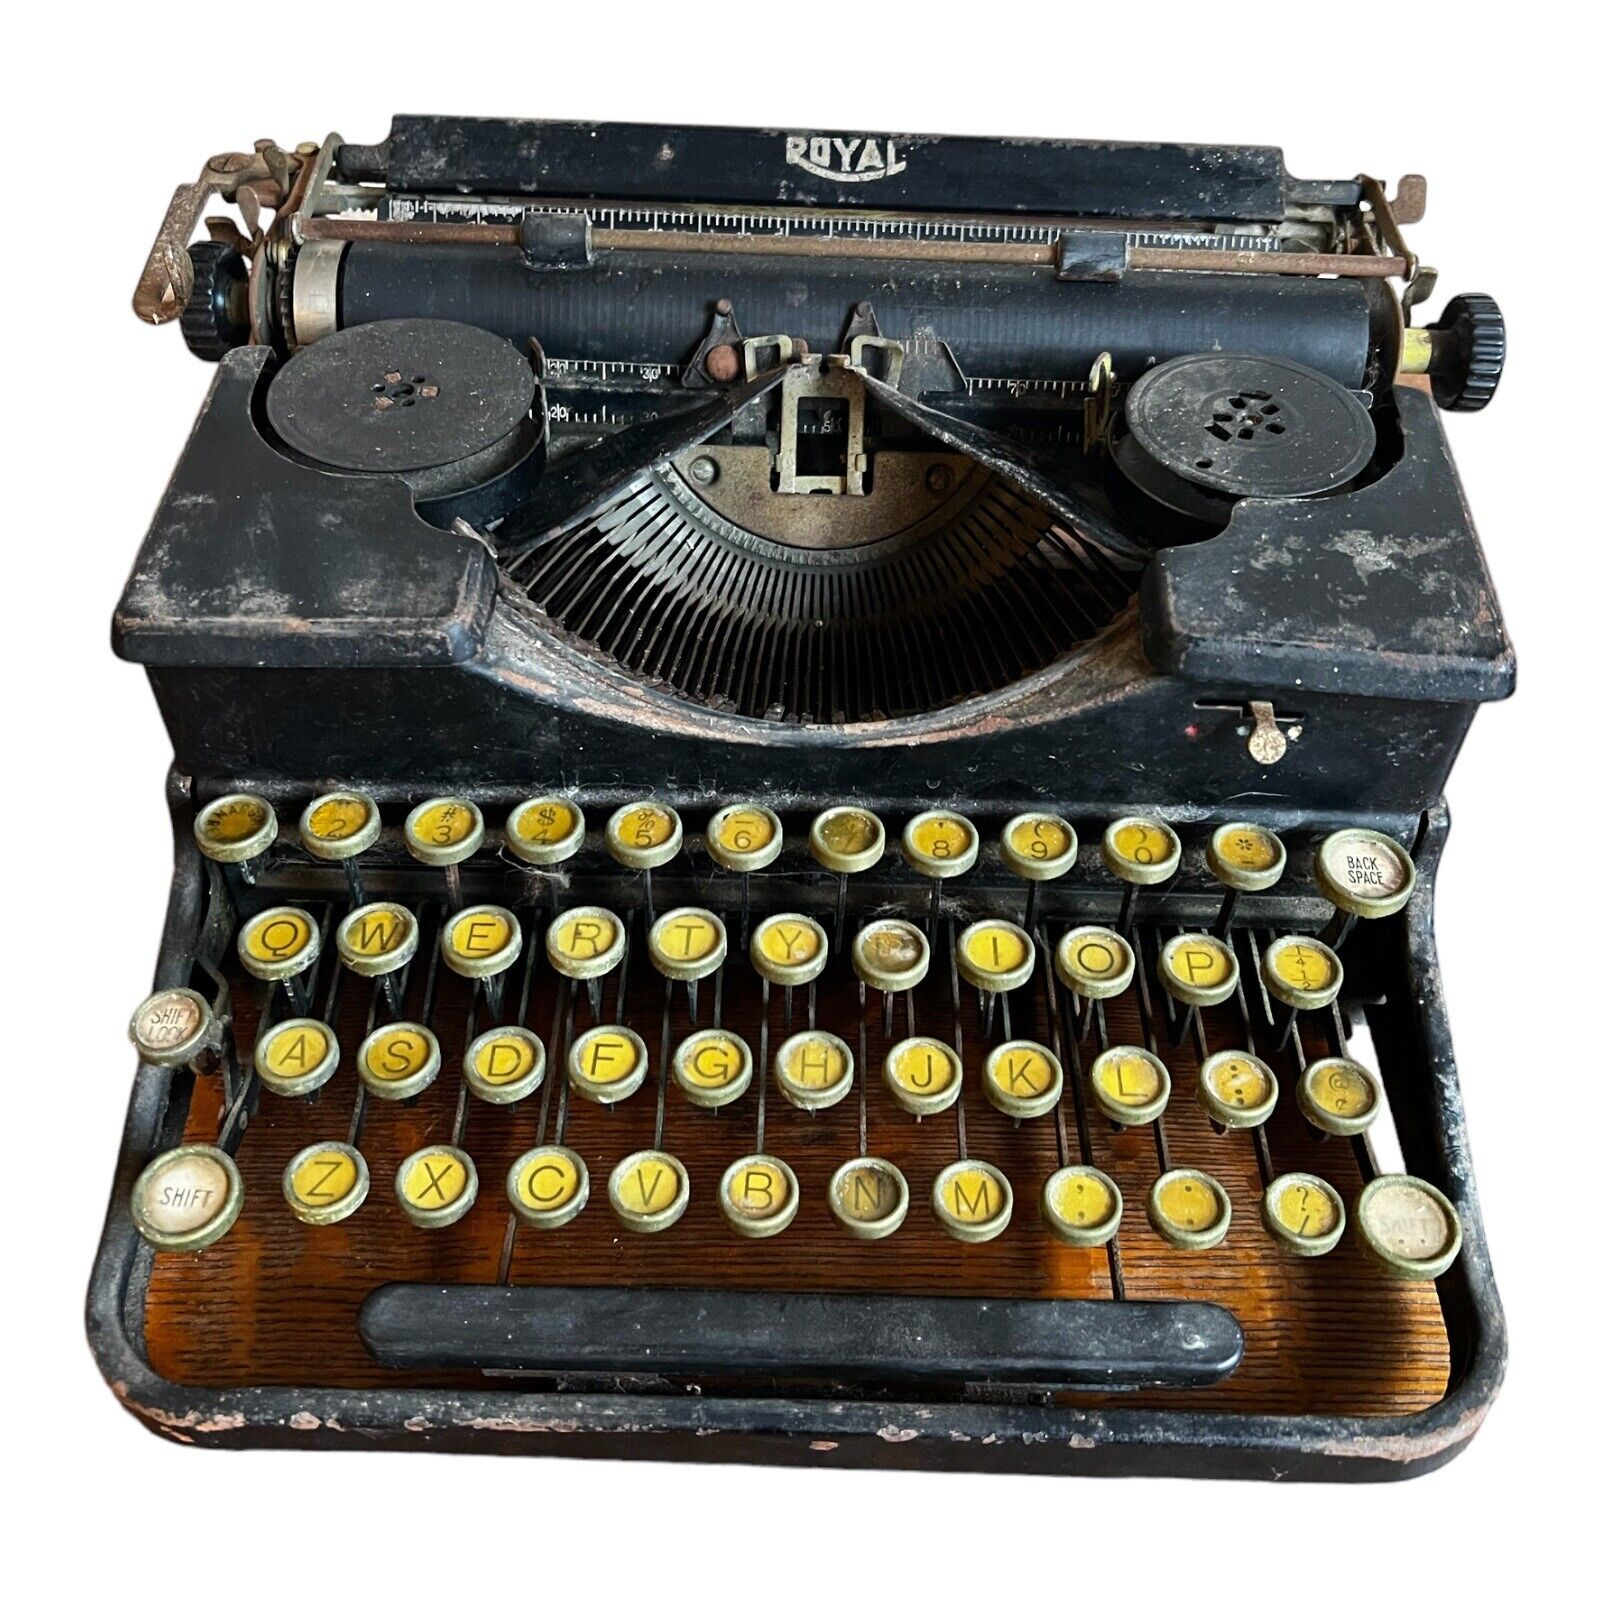 1929 Model Royal Typewriter Antique, Vintage, Made In USA No Case